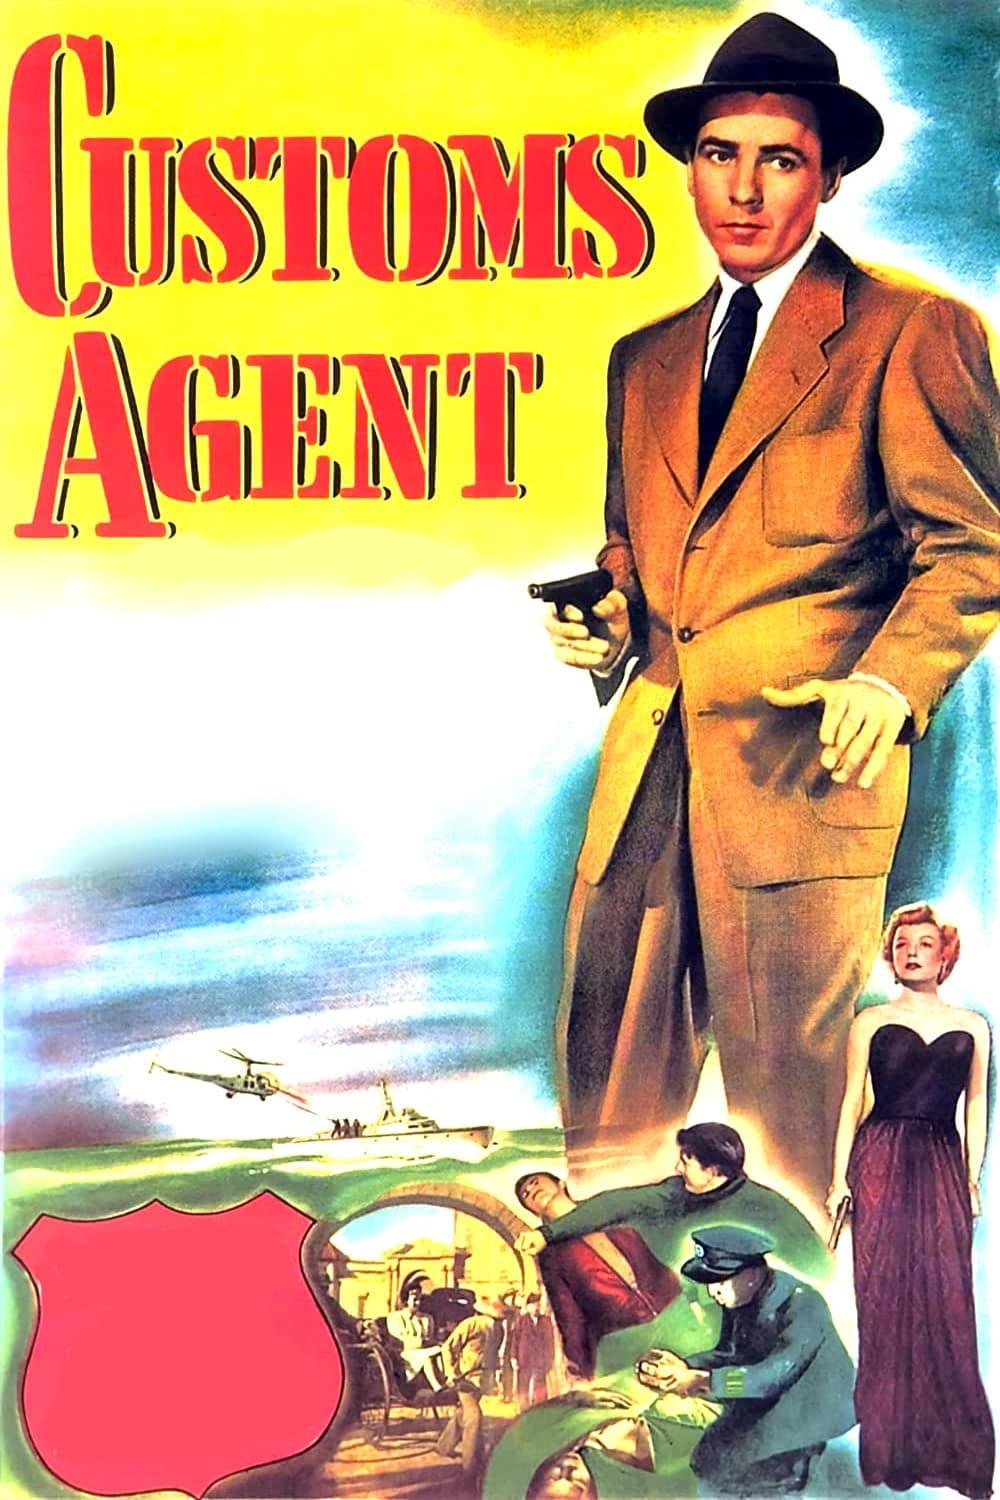 Customs Agent poster